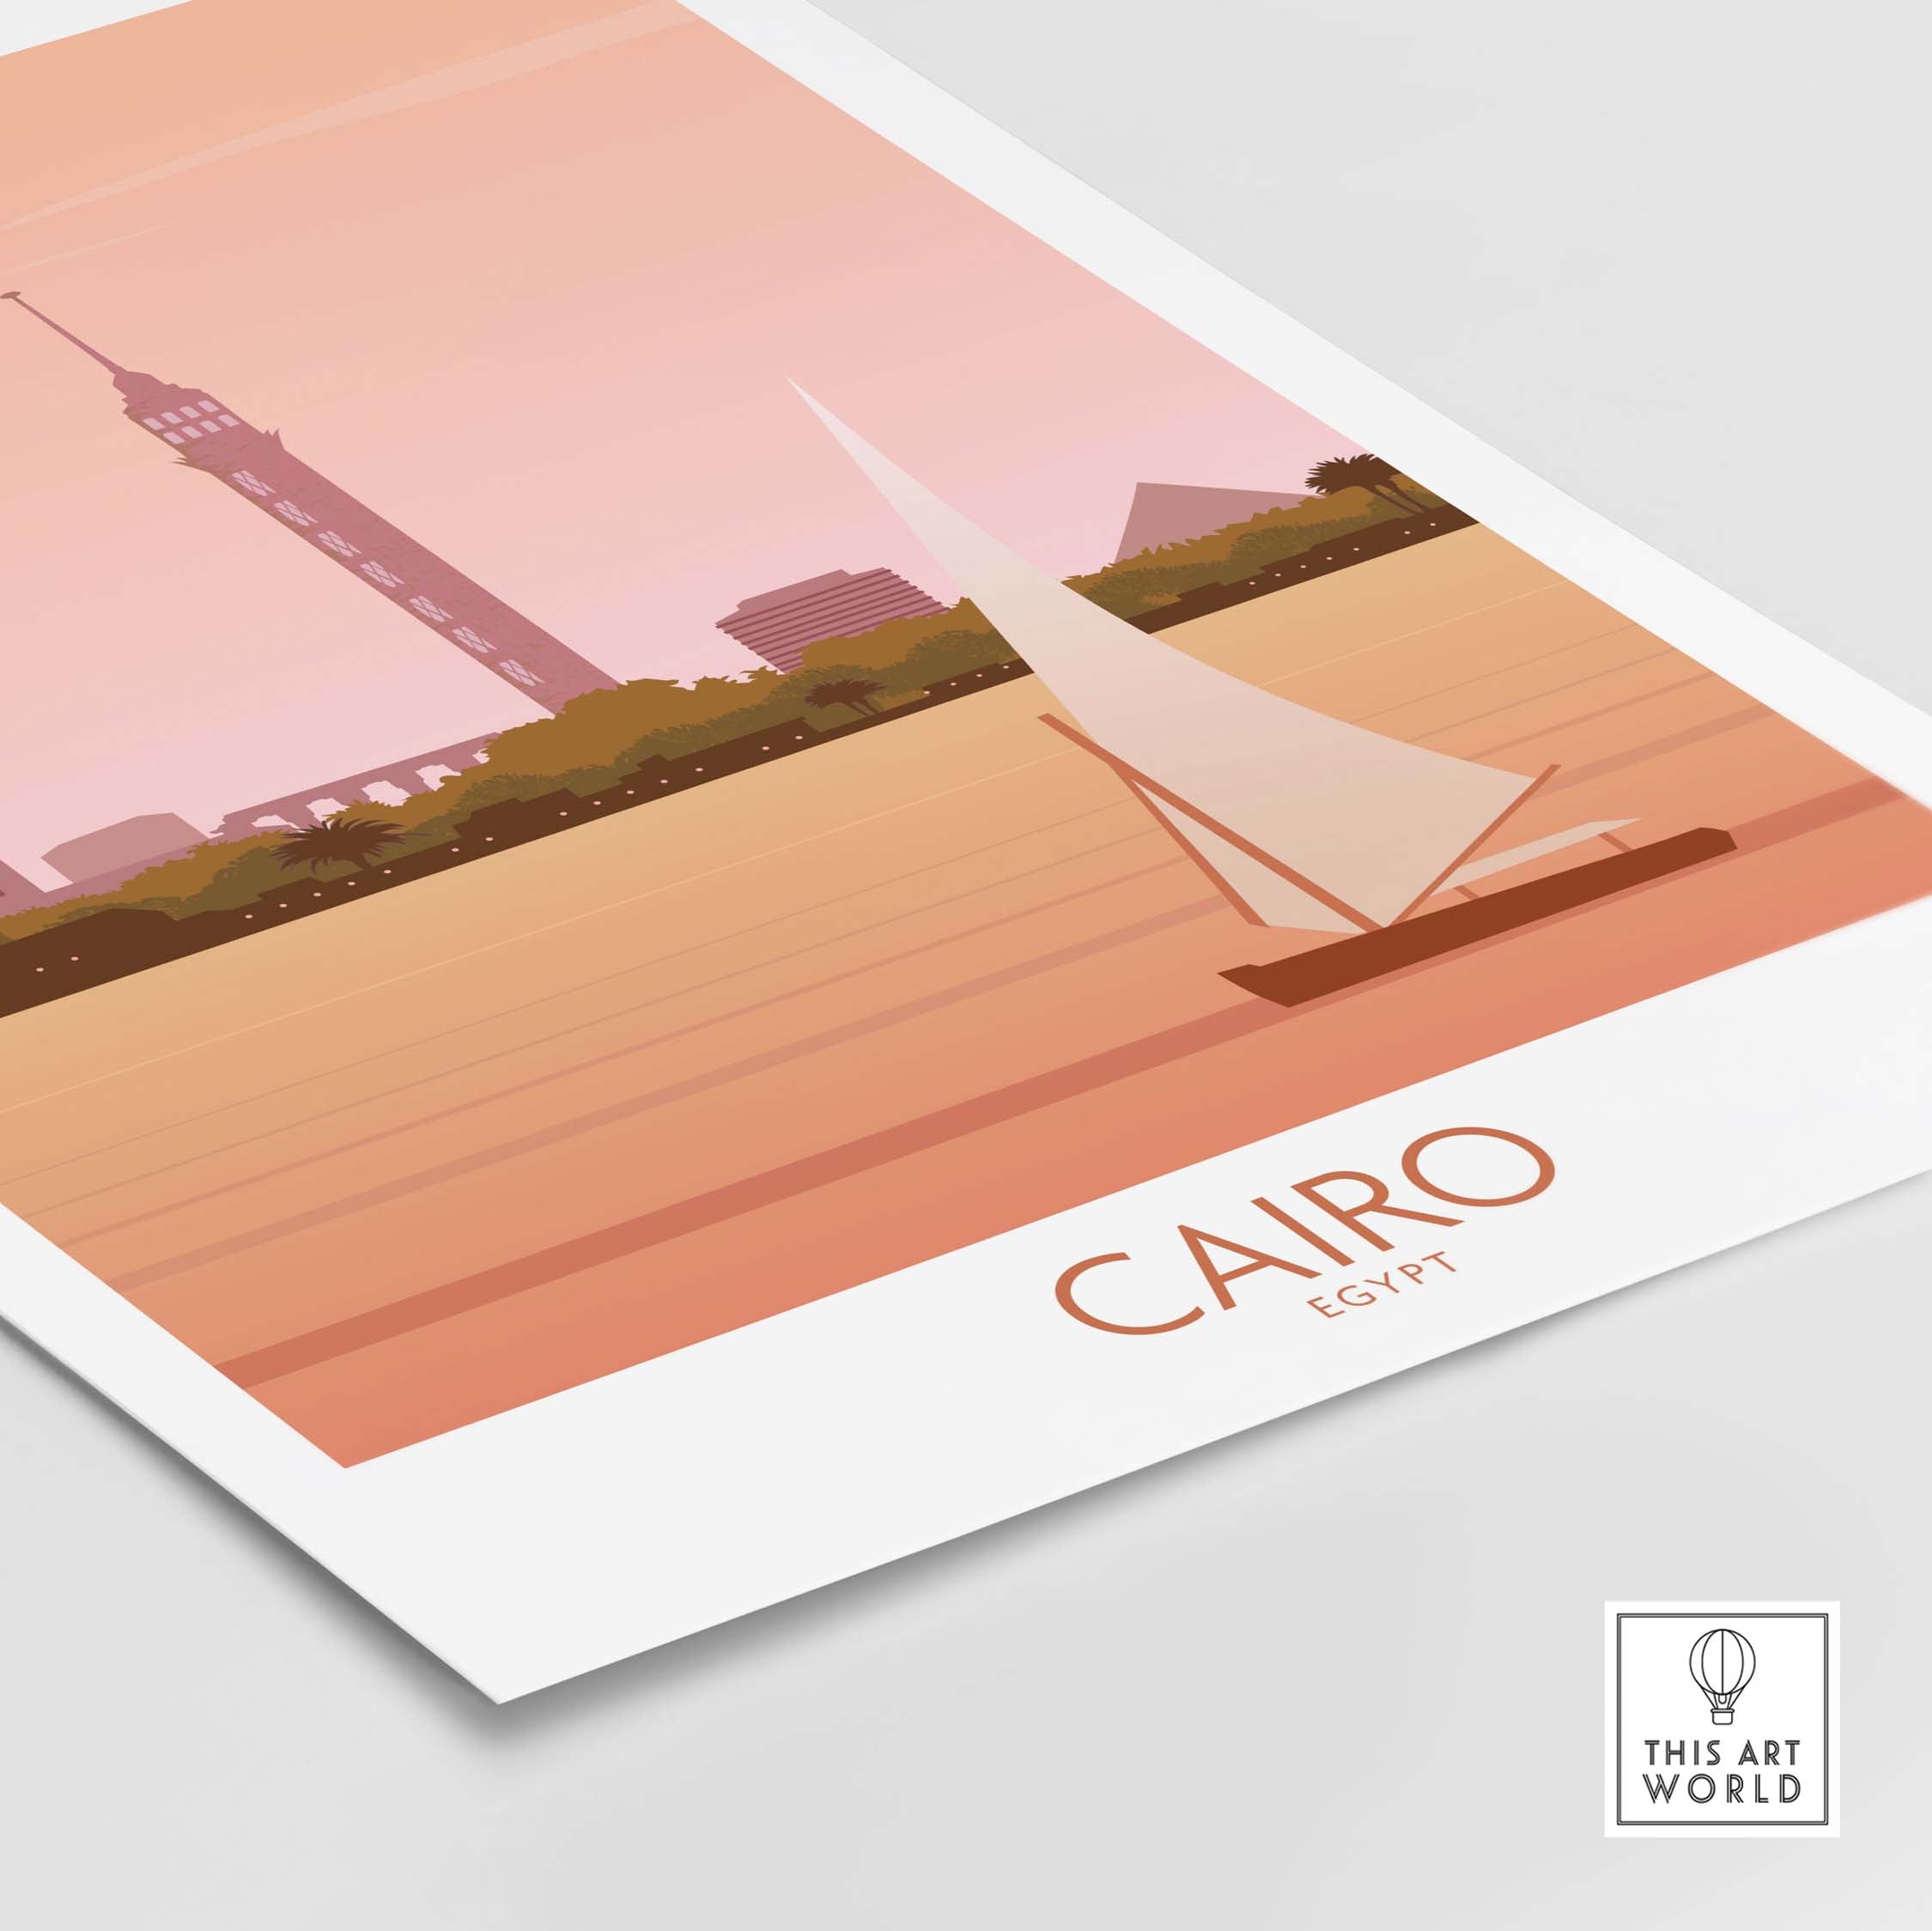 cairo travel poster print